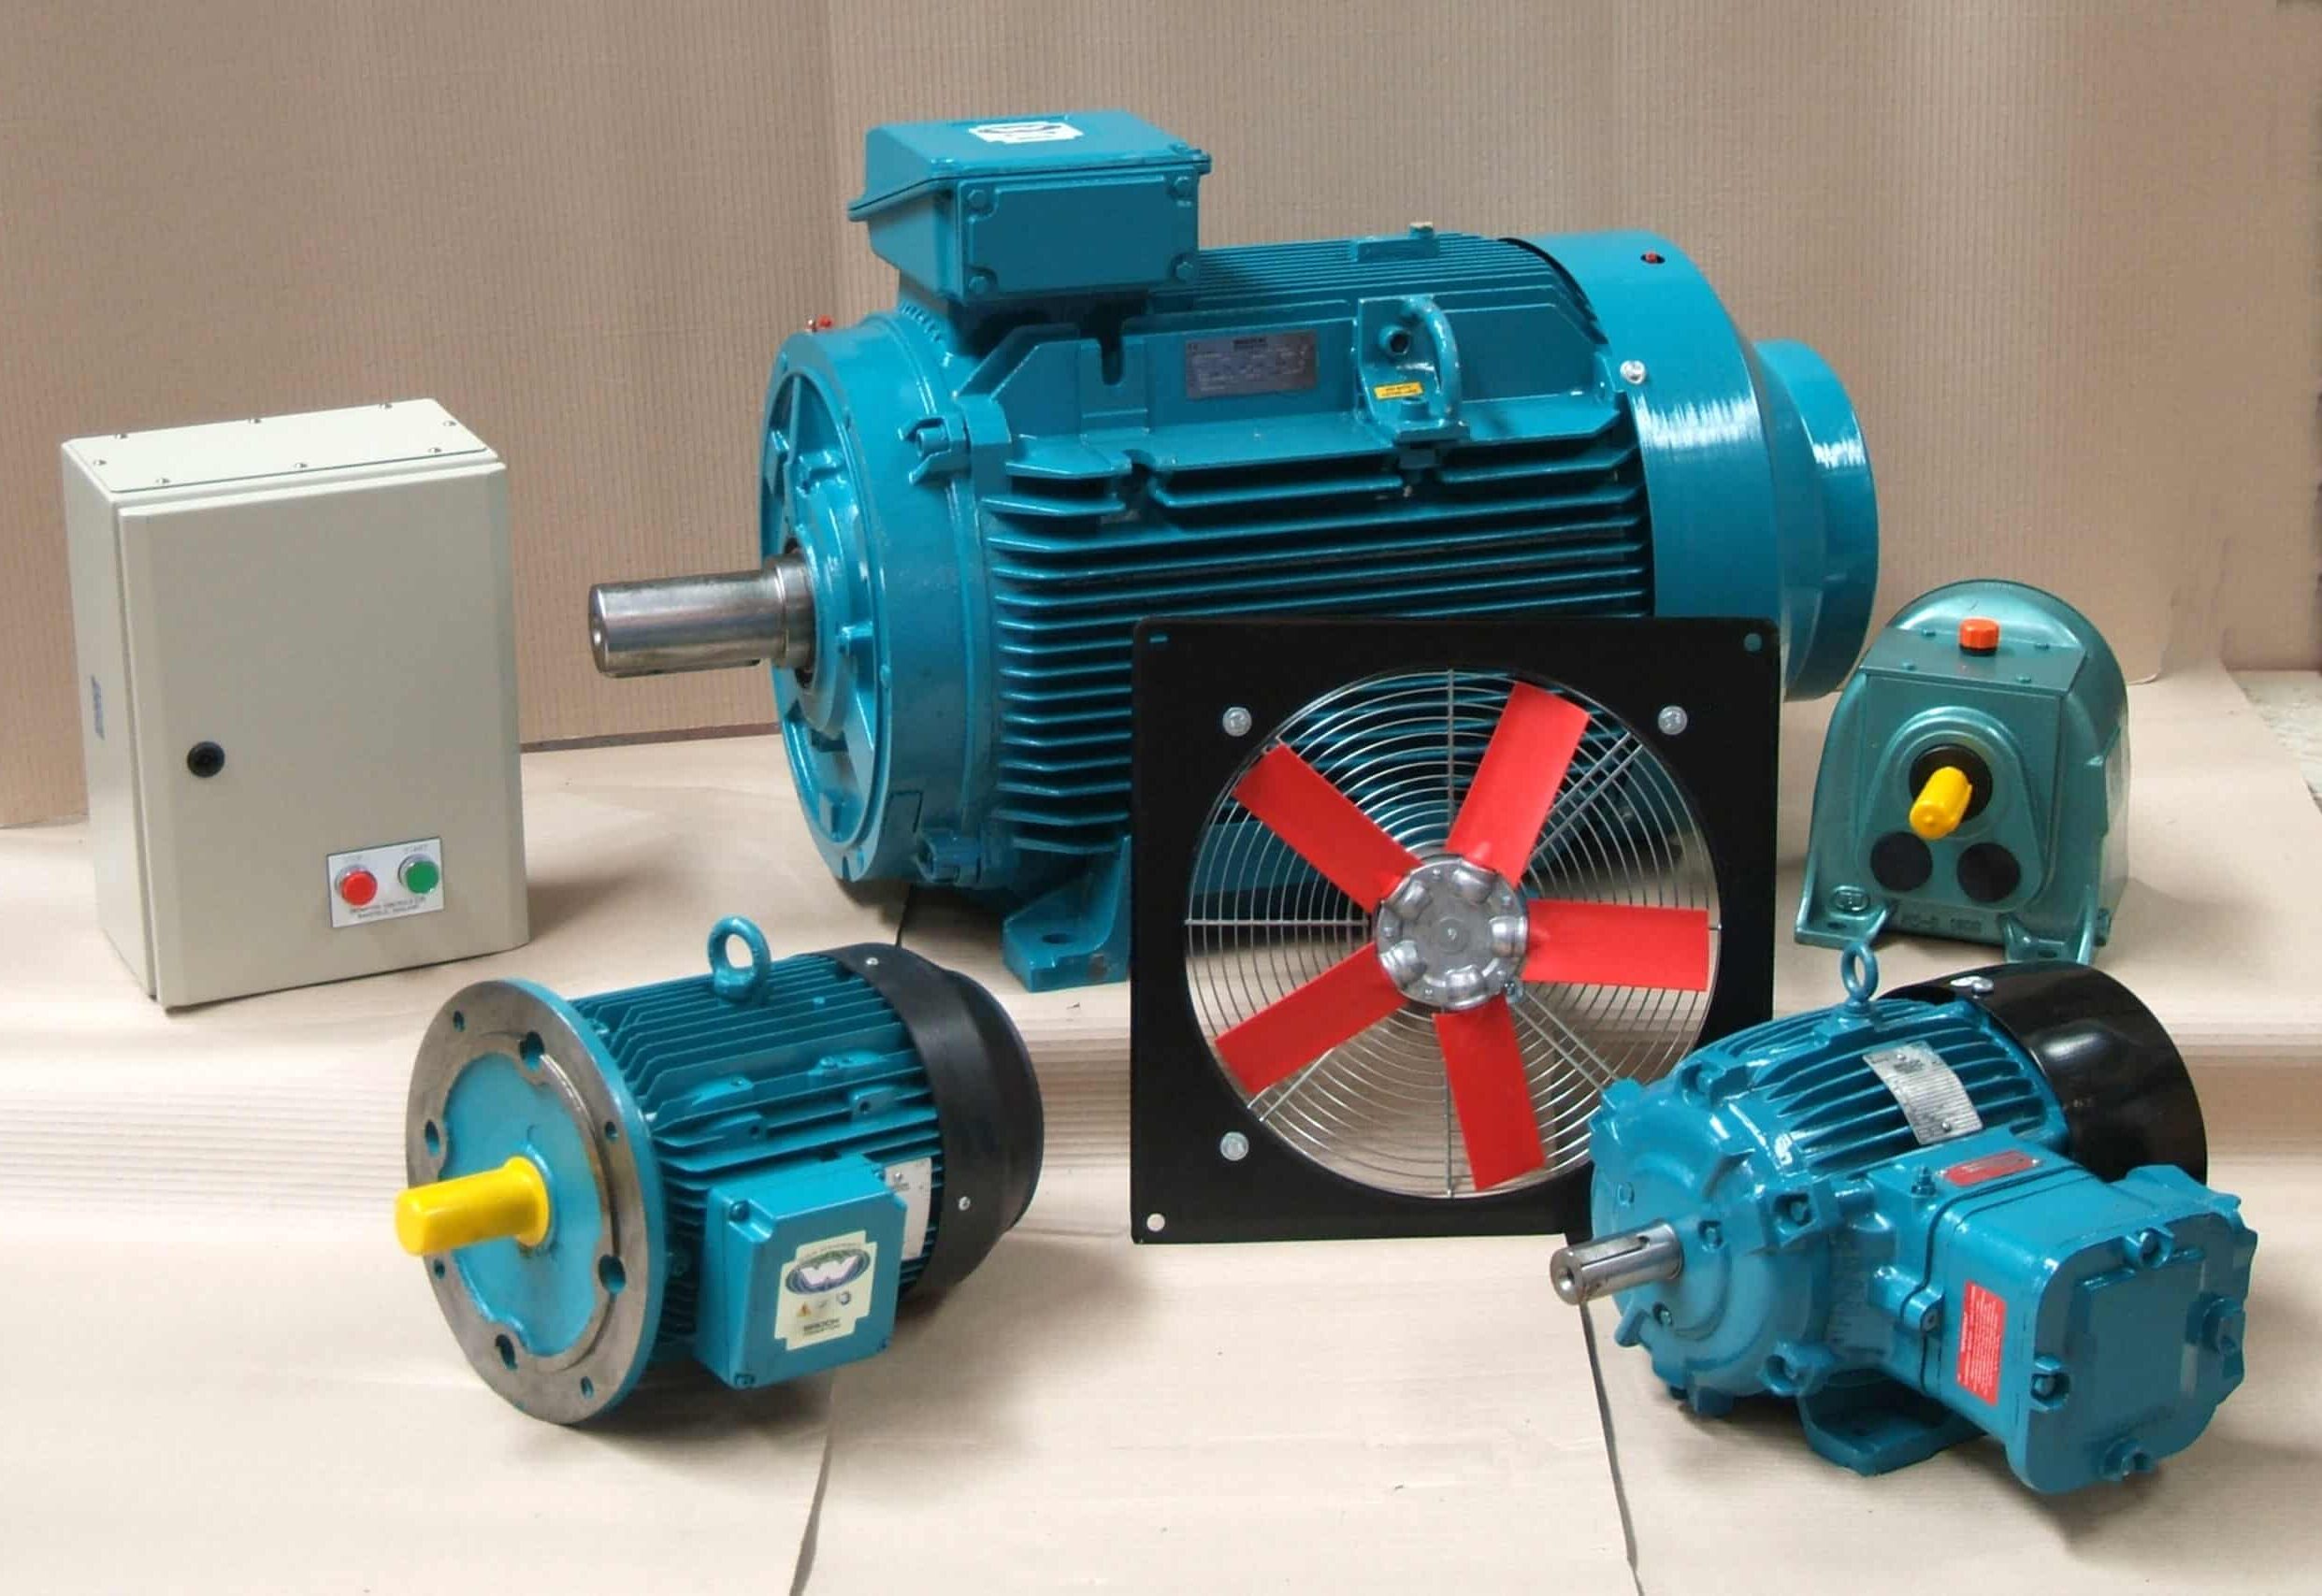 New motors and associated equipment